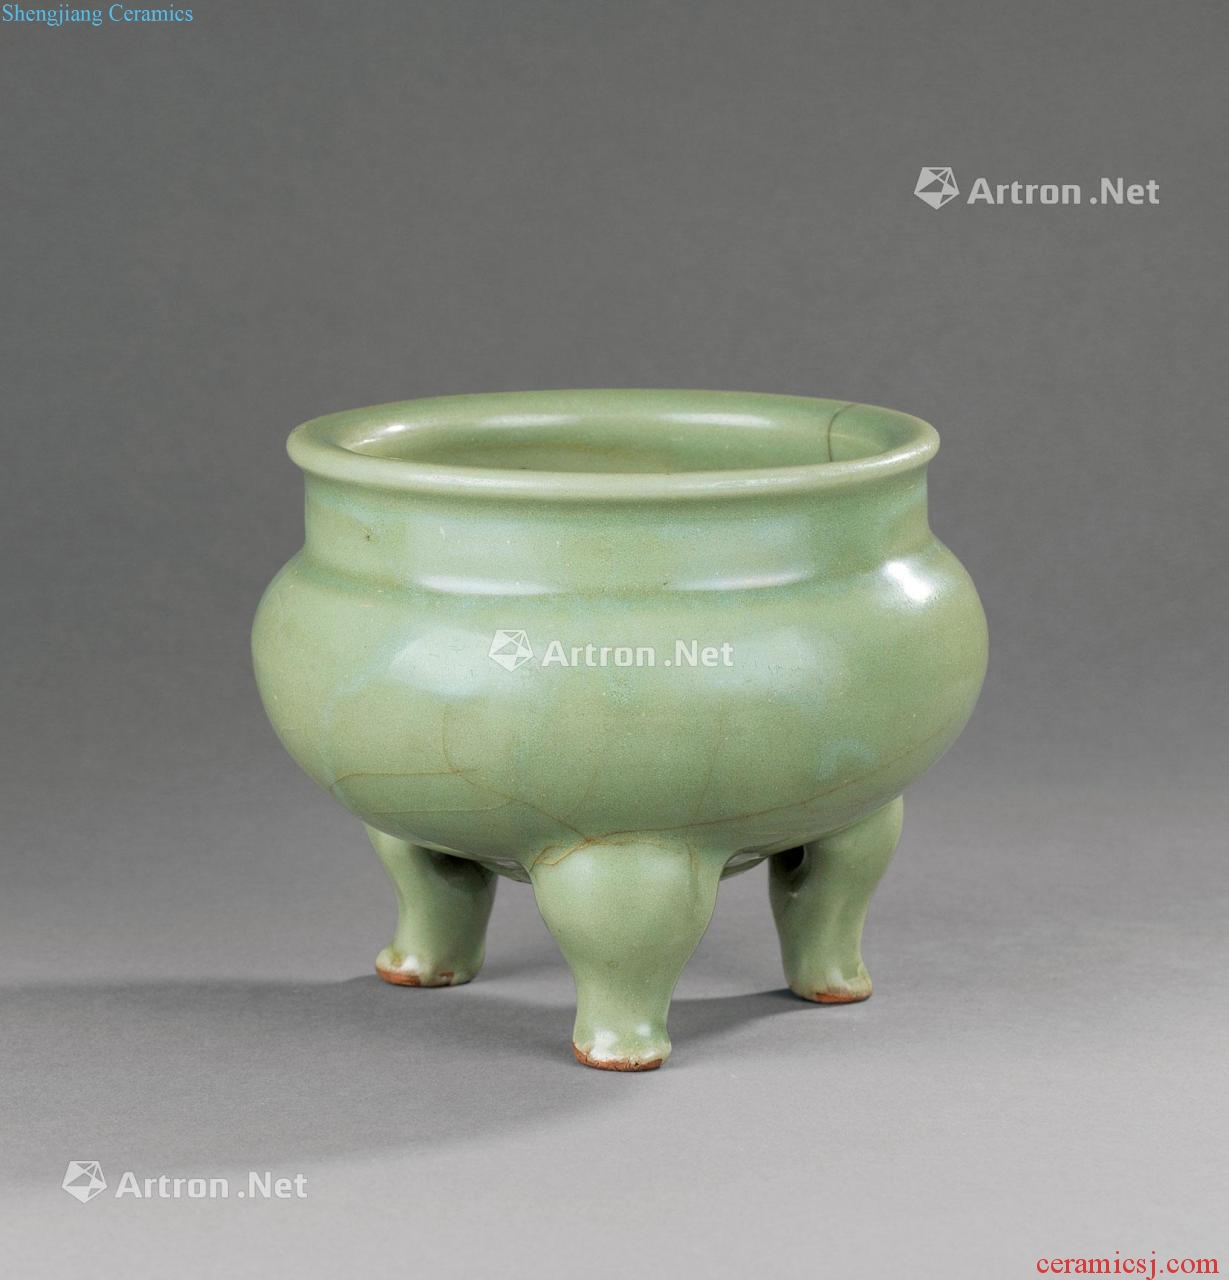 In the Ming dynasty (1368-1644), longquan celadon three-legged incense burner